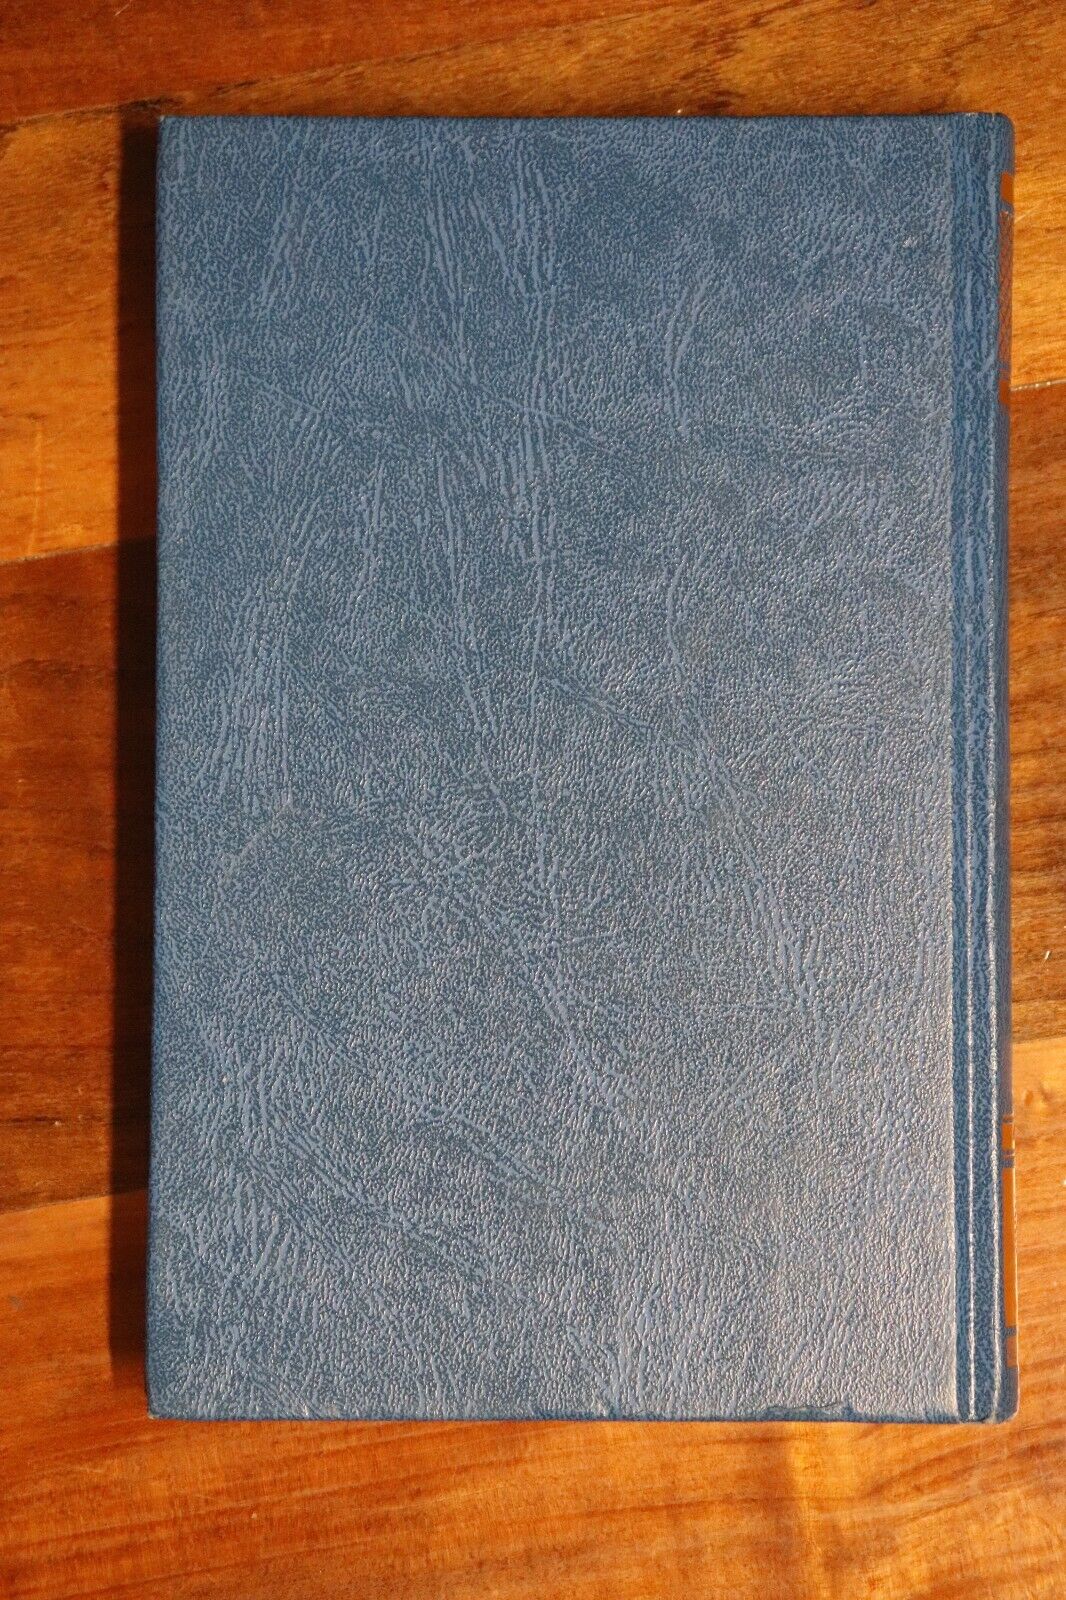 The Adventures Of Huckleberry Finn - 1987 - Classic Literature Book